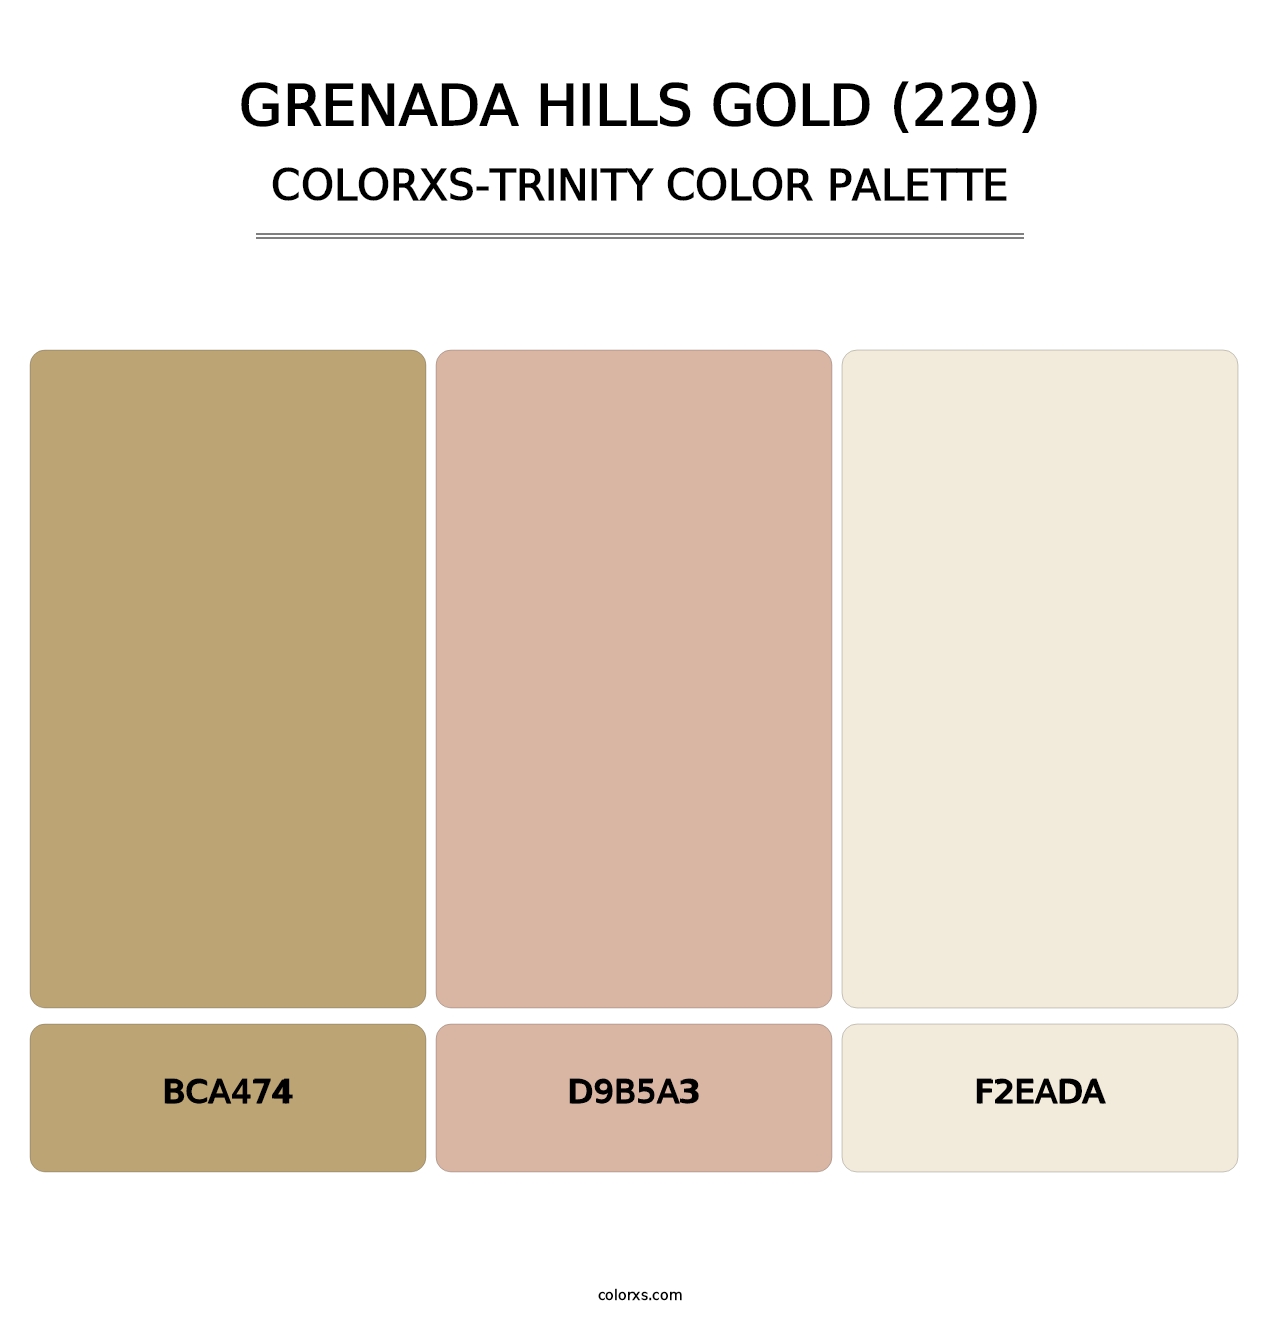 Grenada Hills Gold (229) - Colorxs Trinity Palette